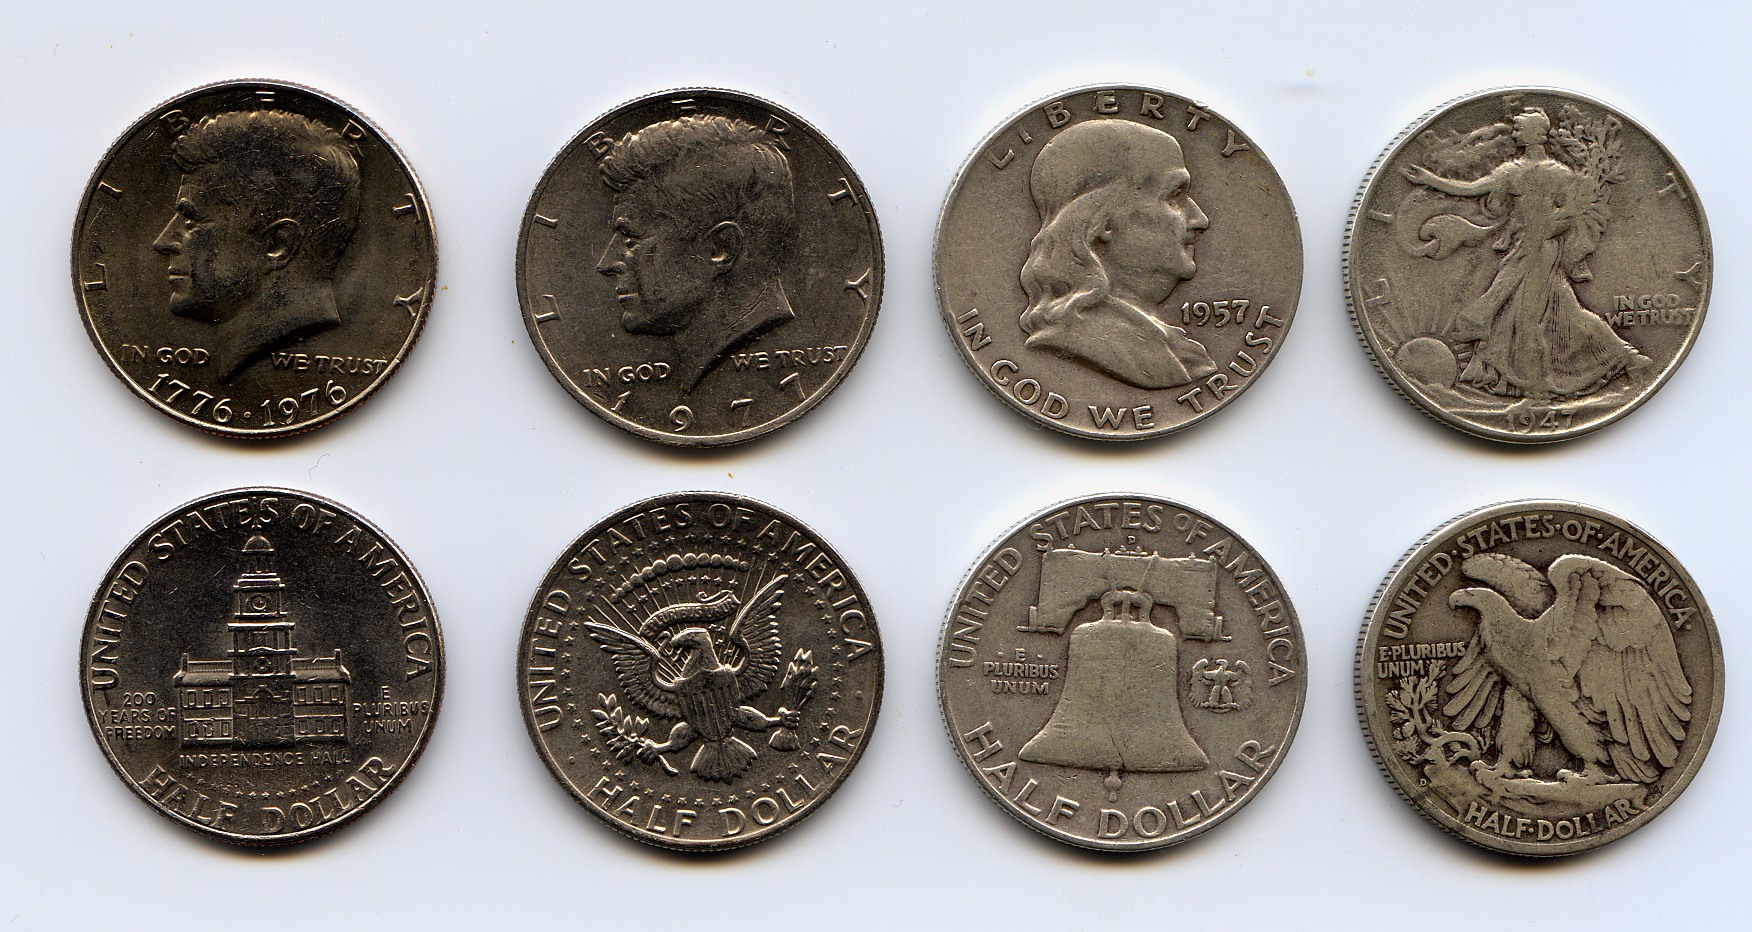 2006 D President Kennedy Half Dollar Coin Fifty Cent Money Coins U.S Mint Roll